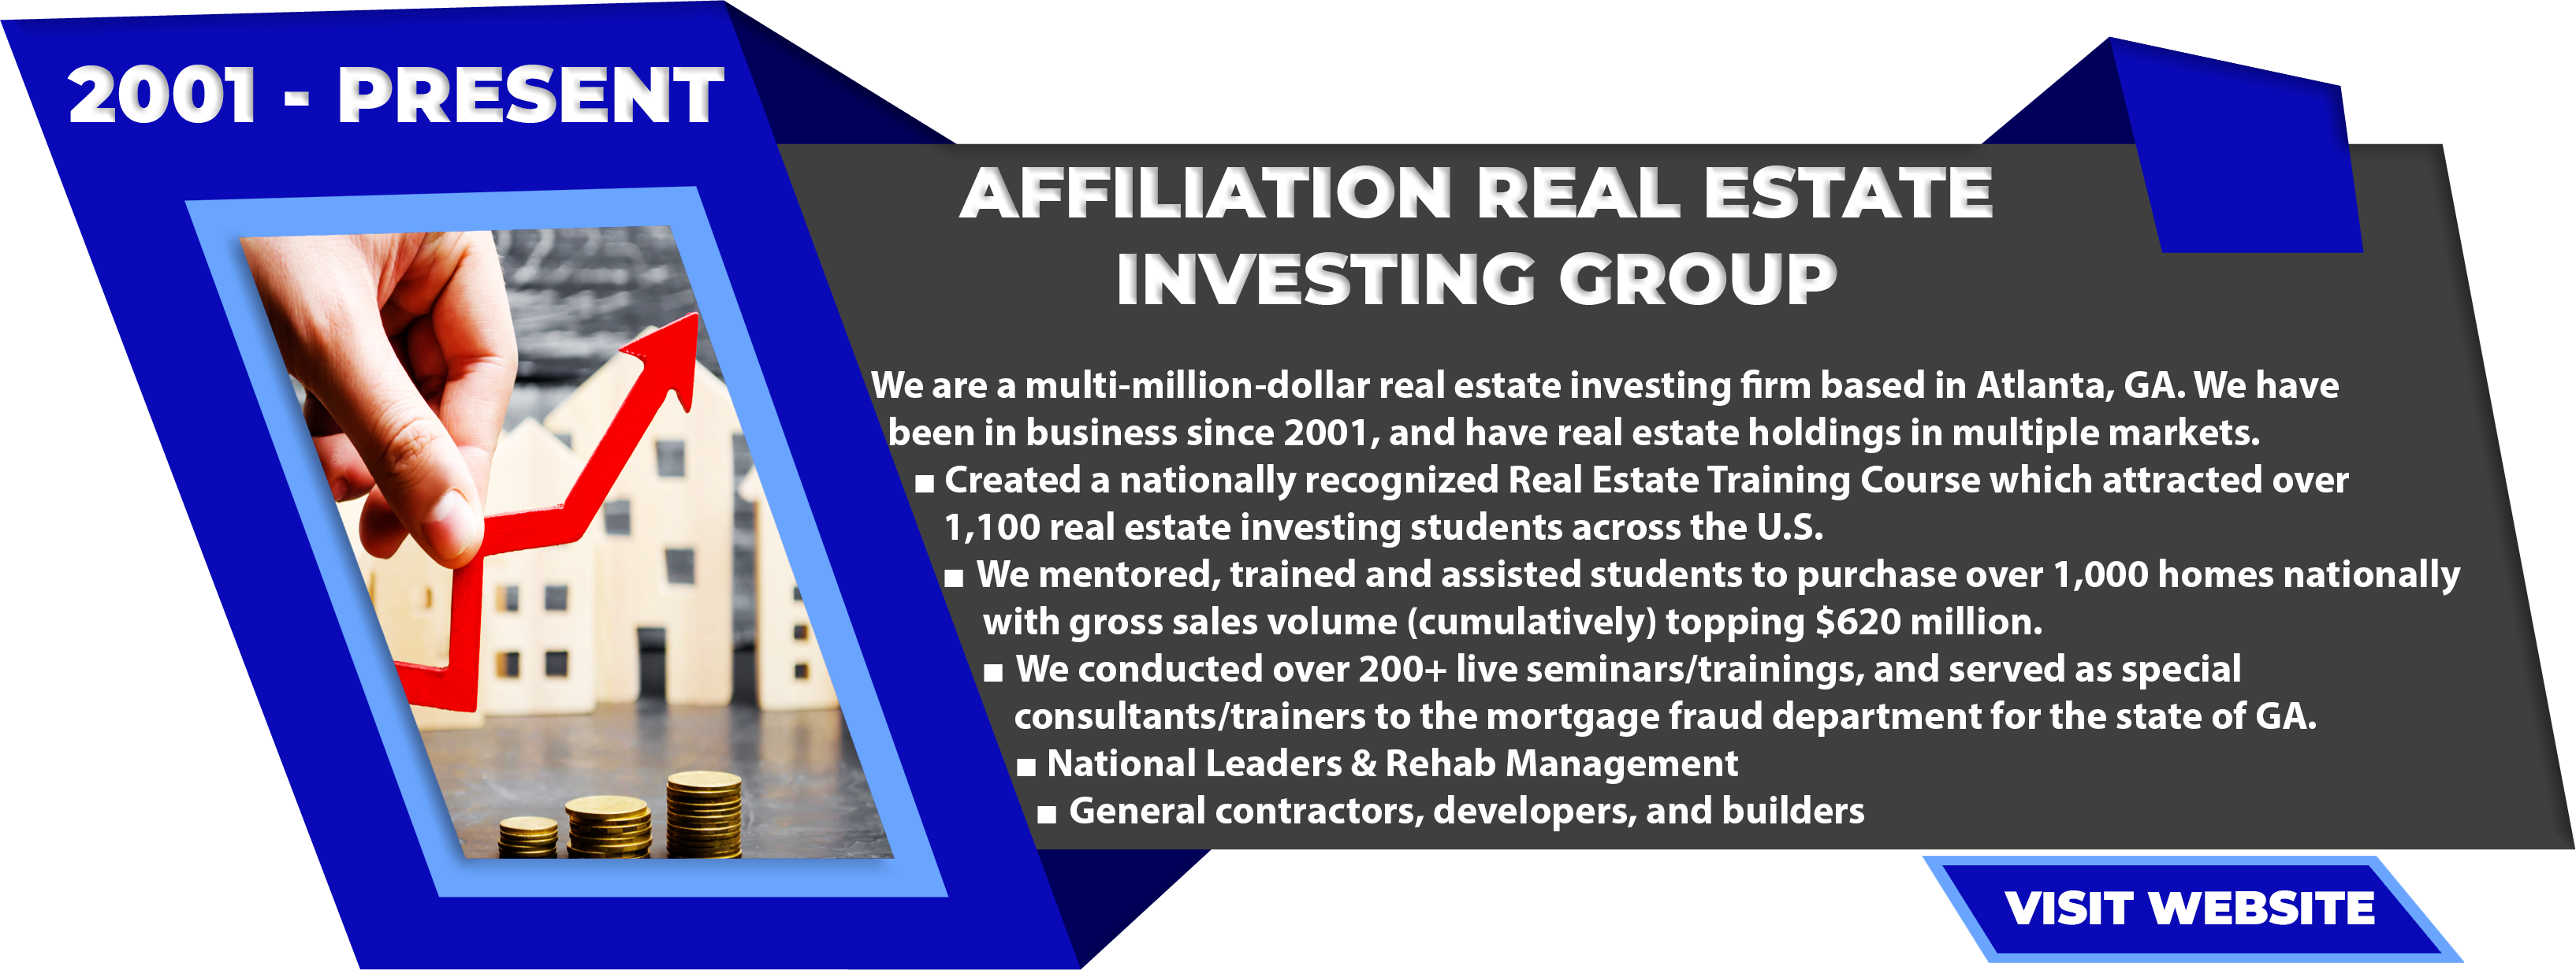 Affiliation Real Estate Investing Group 2001 – Present